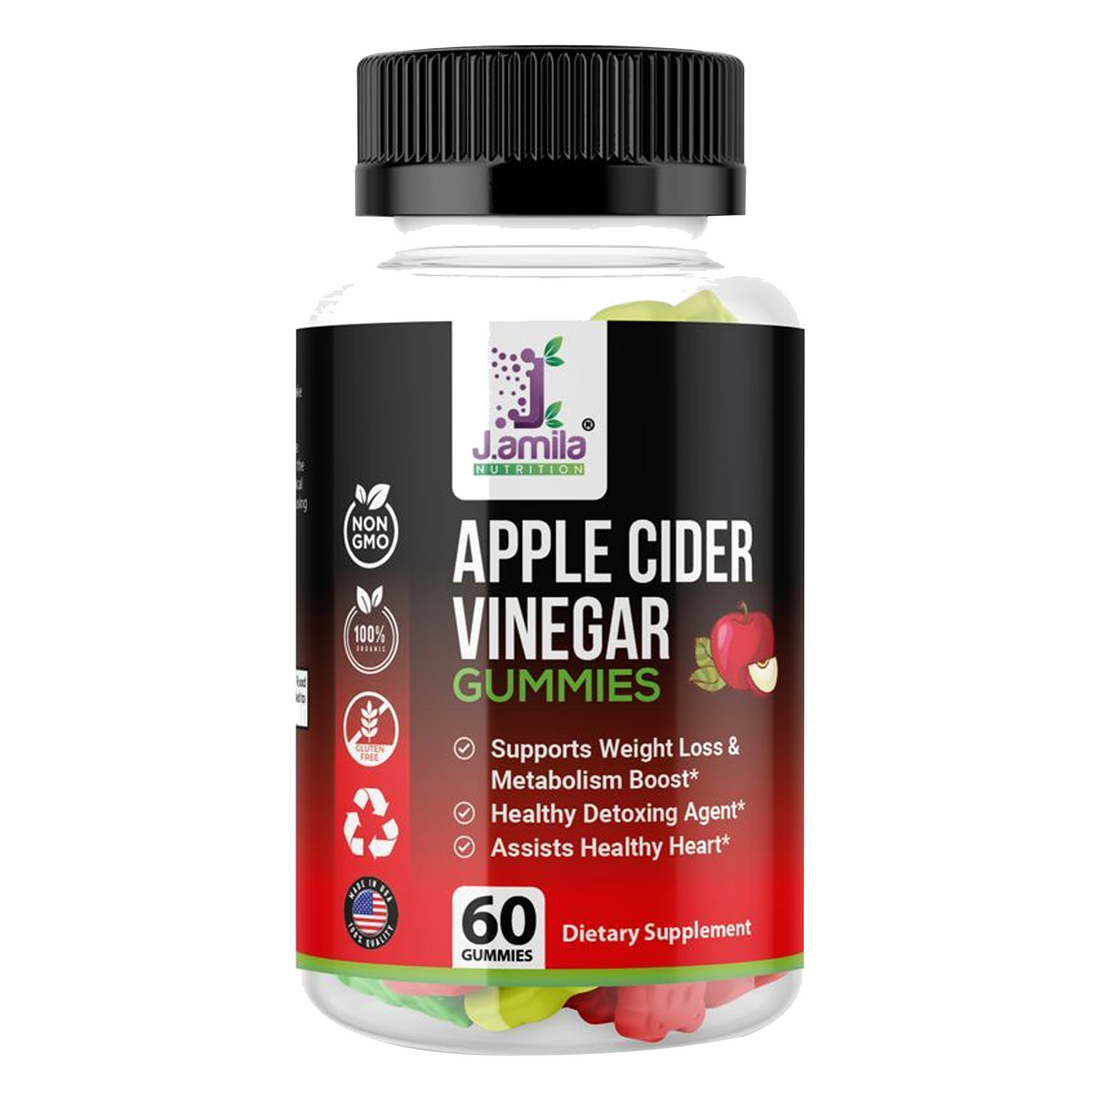 J.AMILA® Apple Cider Vinegar Gummies 60ct